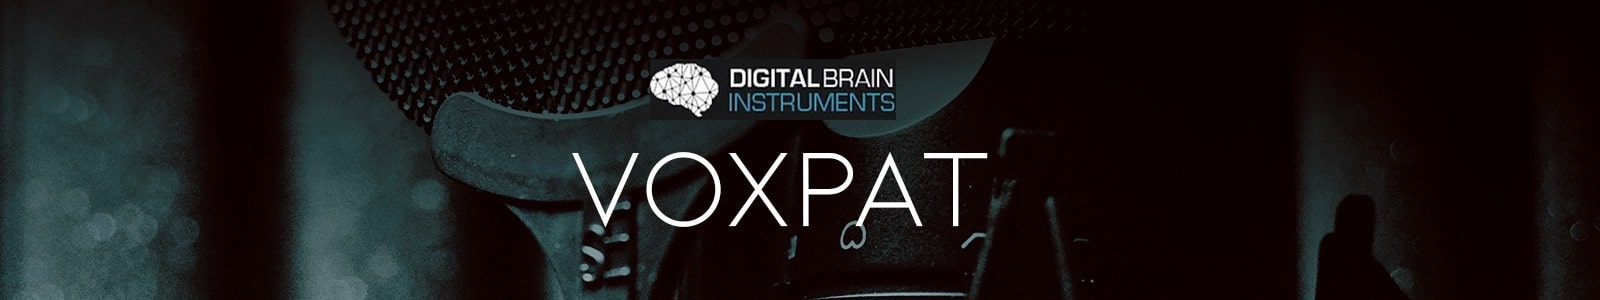 Voxpat by Digital Brain Instruments